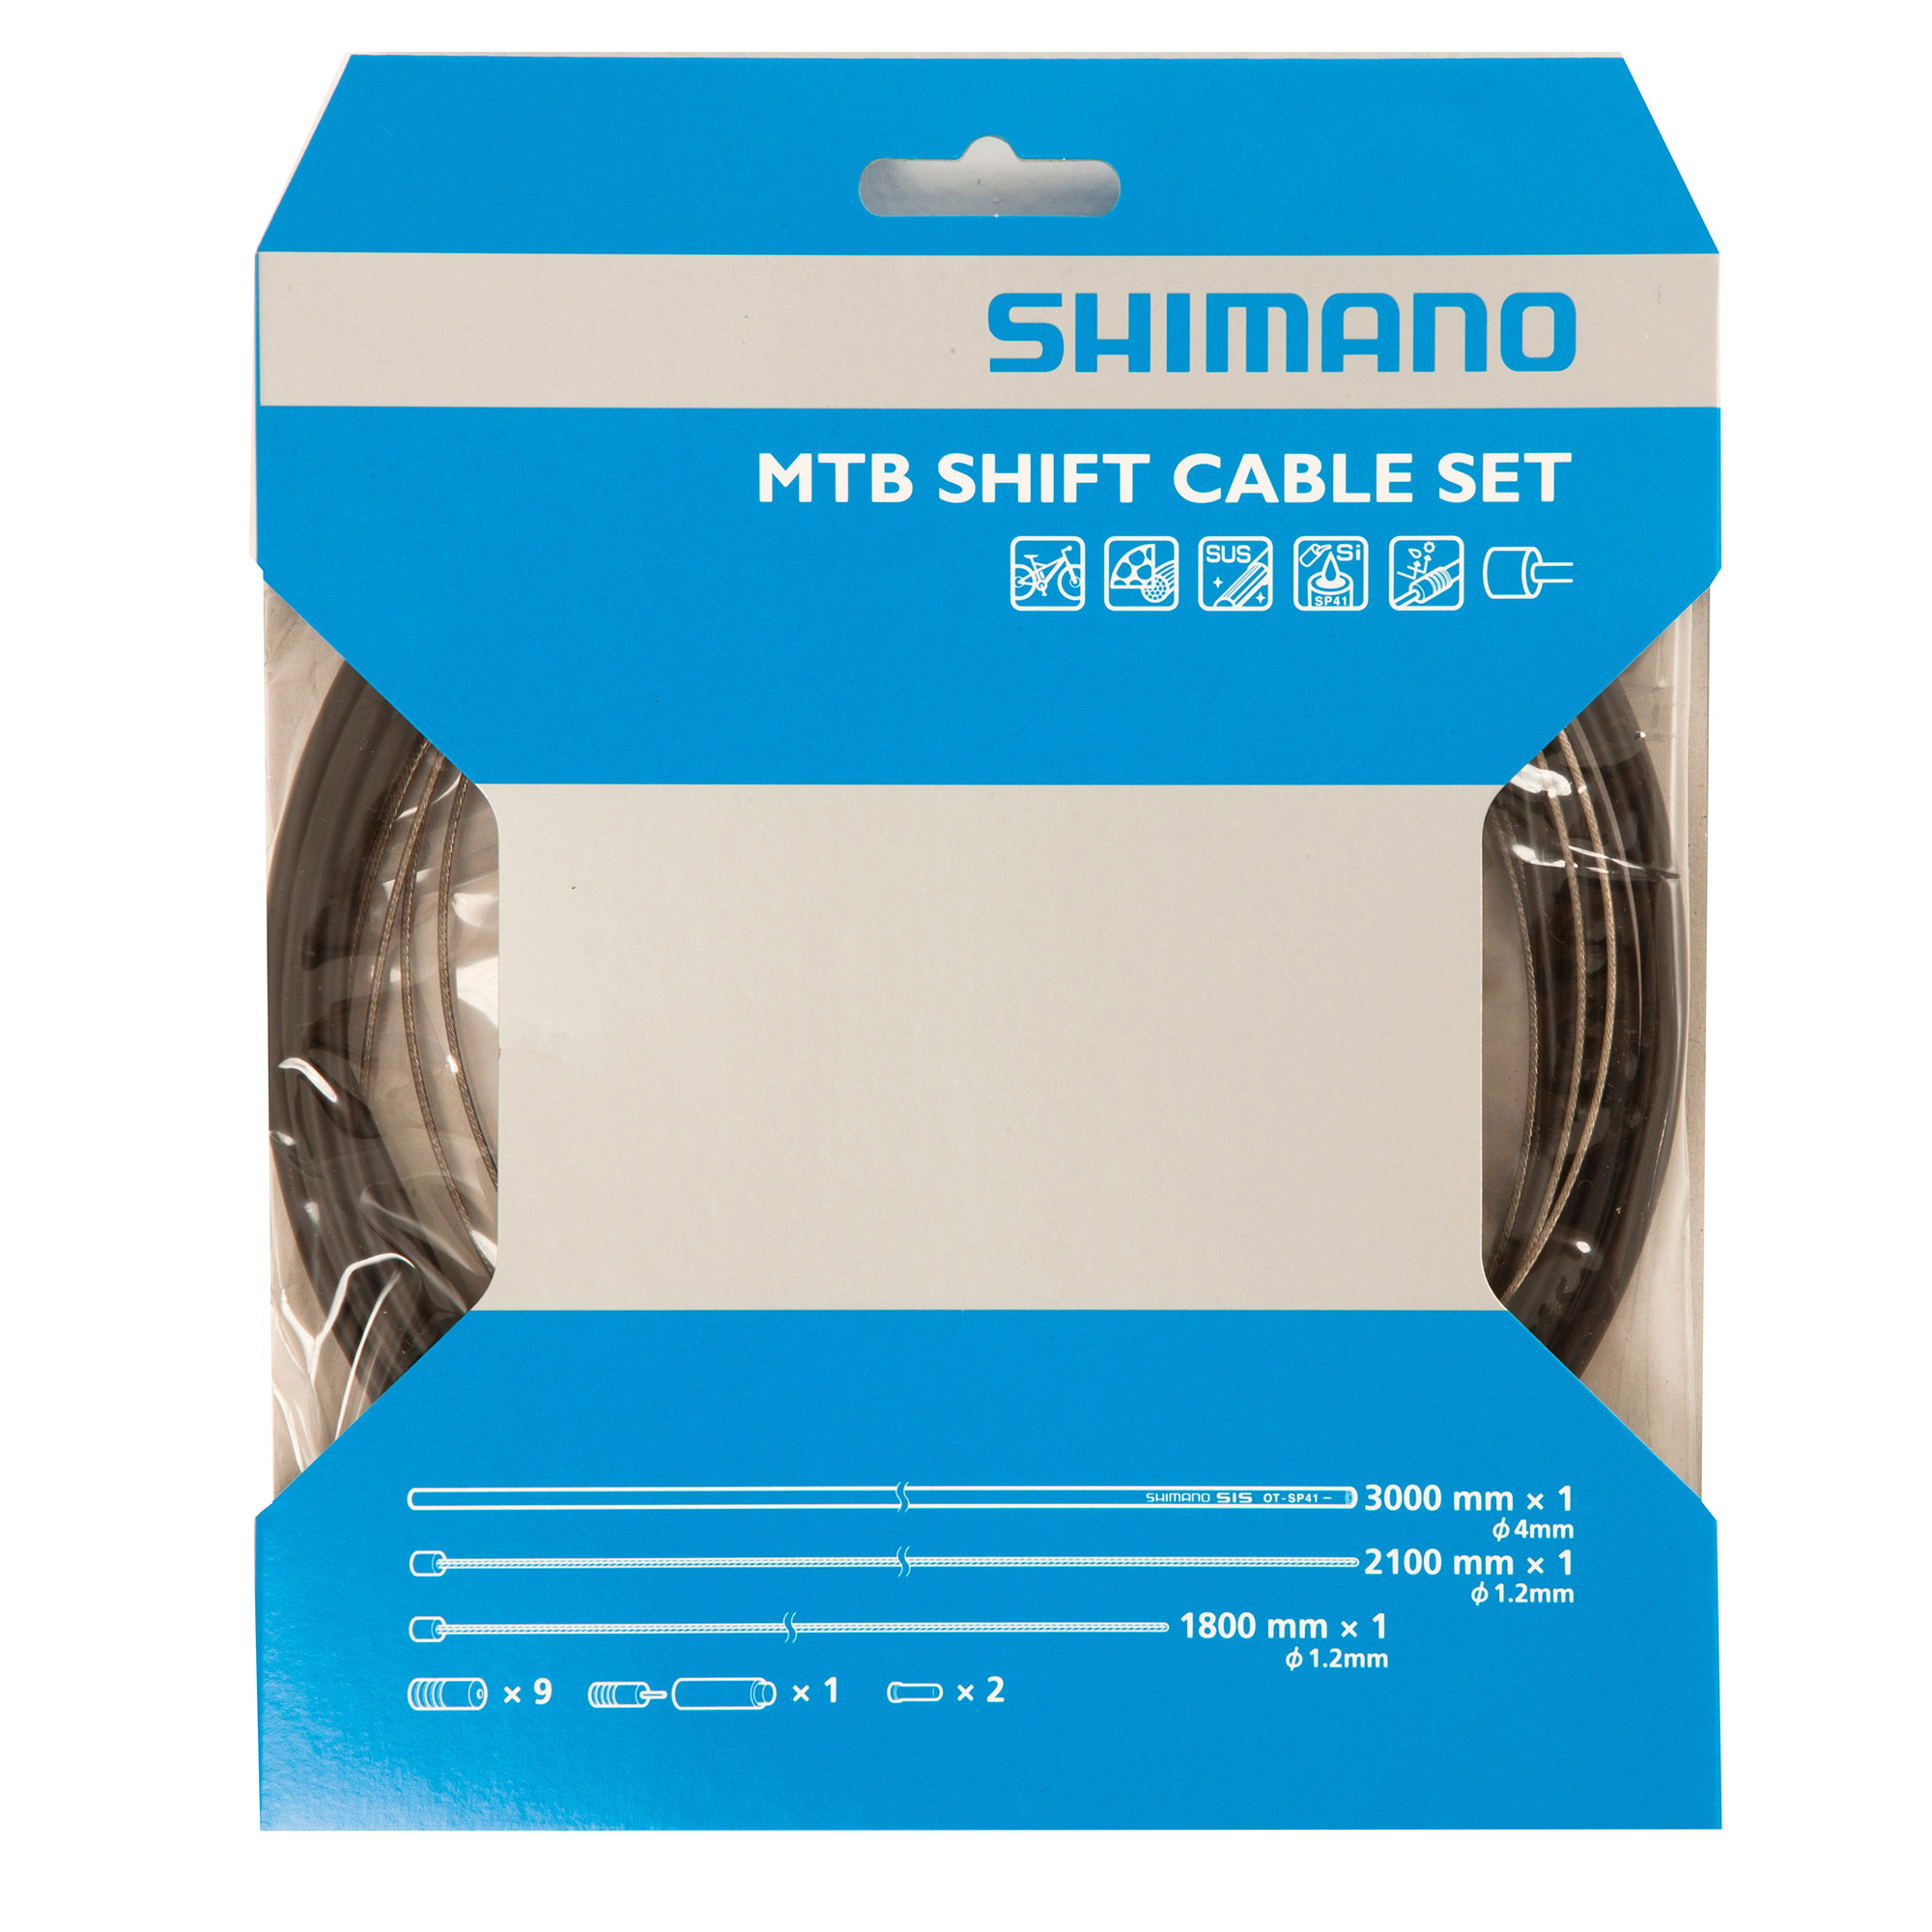 shimano mountain bike gear sets